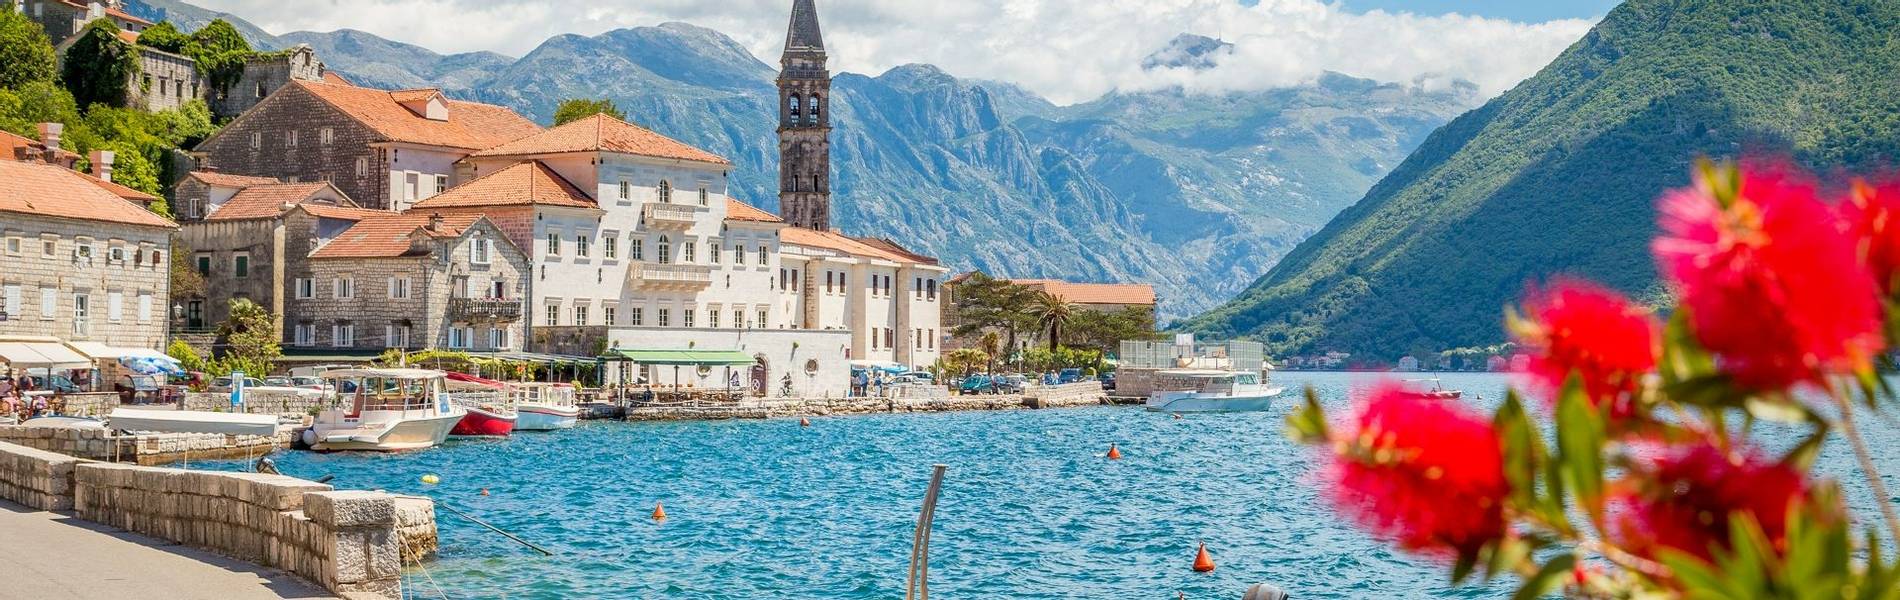 Historic Perast, Bay of Kotor, Montenegro.jpg